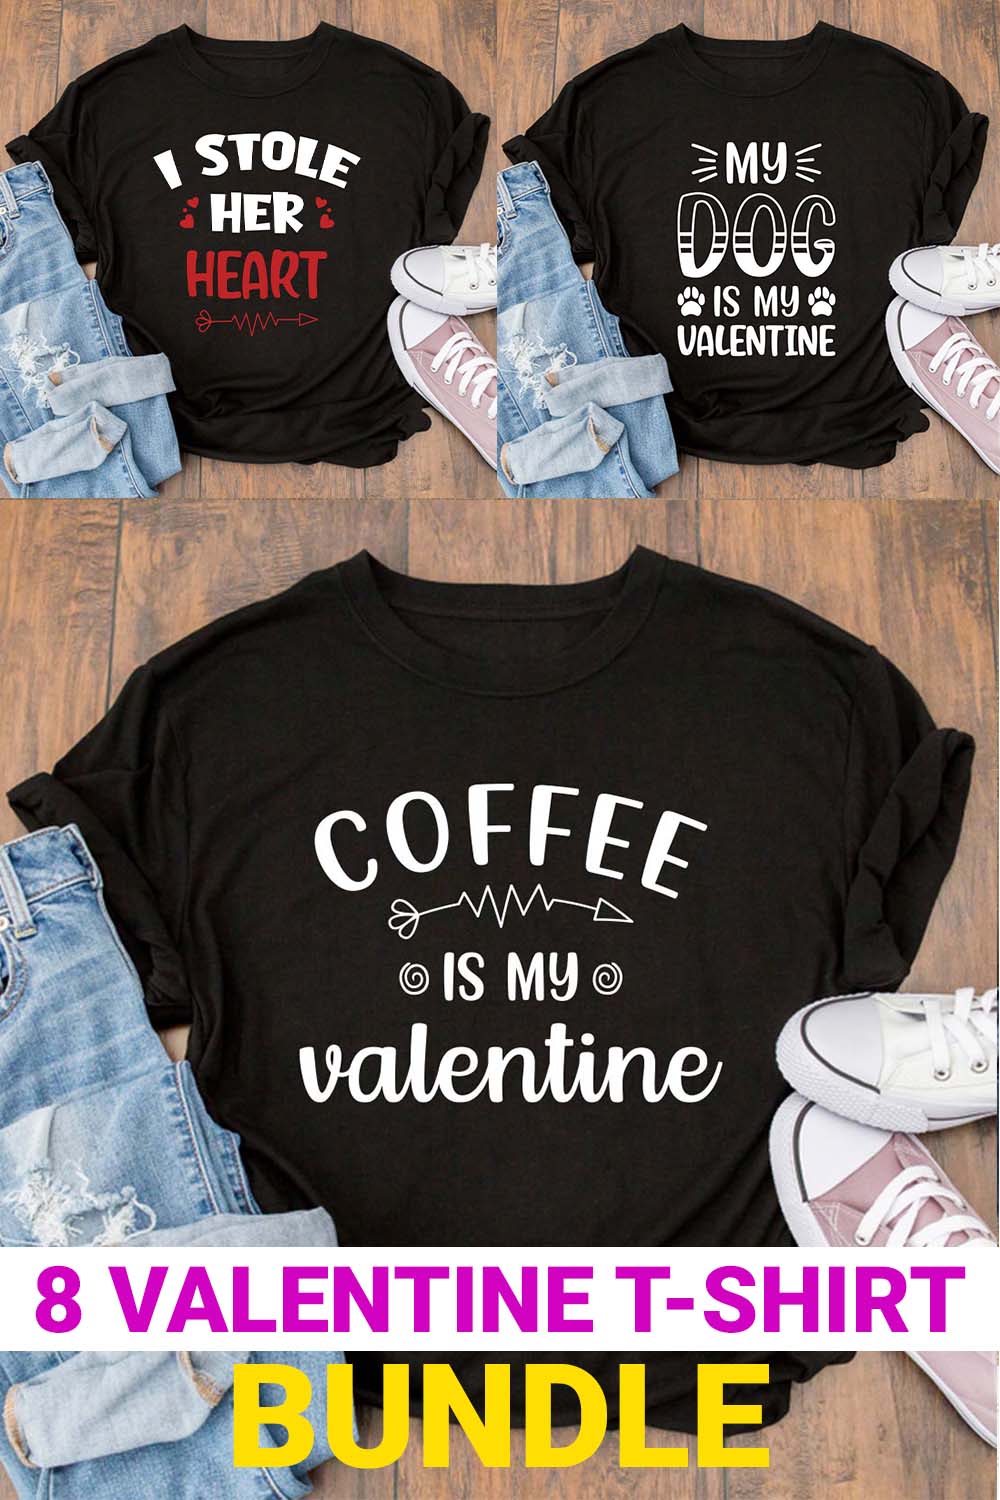 Valentine's Day T-Shirt Bundle pinterest preview image.